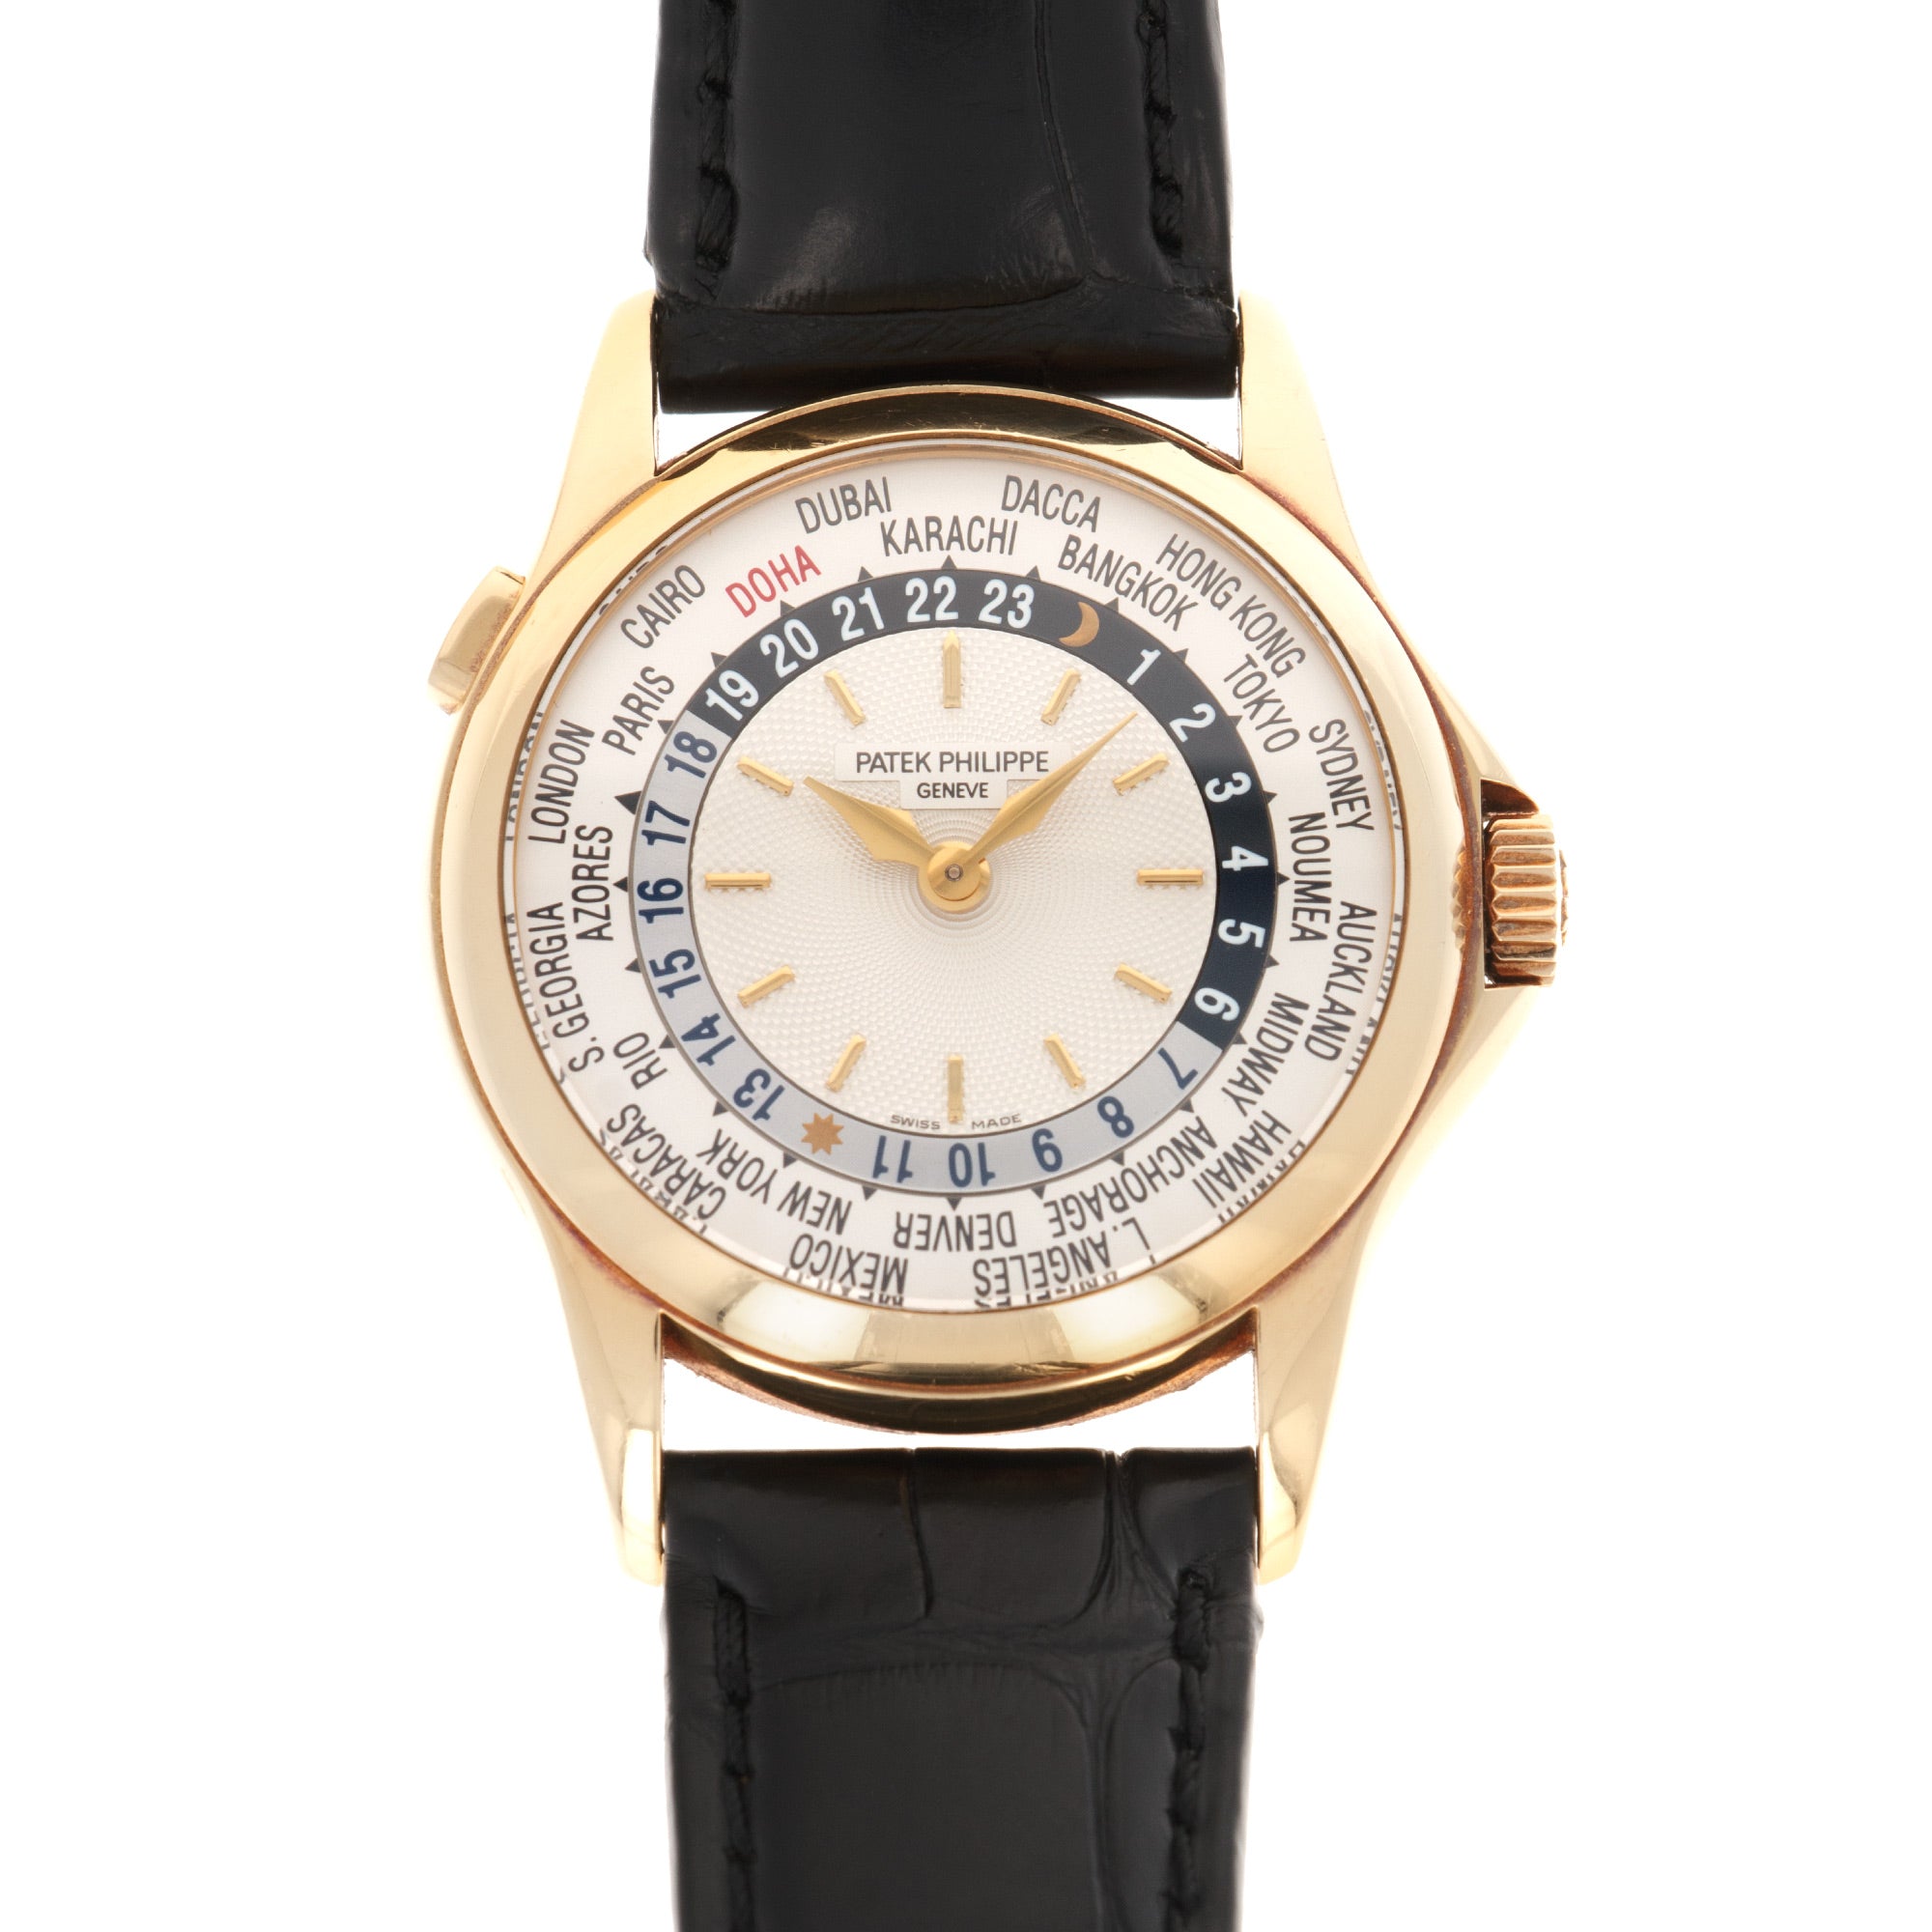 Patek Philippe - Patek Philippe Yellow Gold World Time Watch Ref. 5110, Made for Doha, Qatar - The Keystone Watches